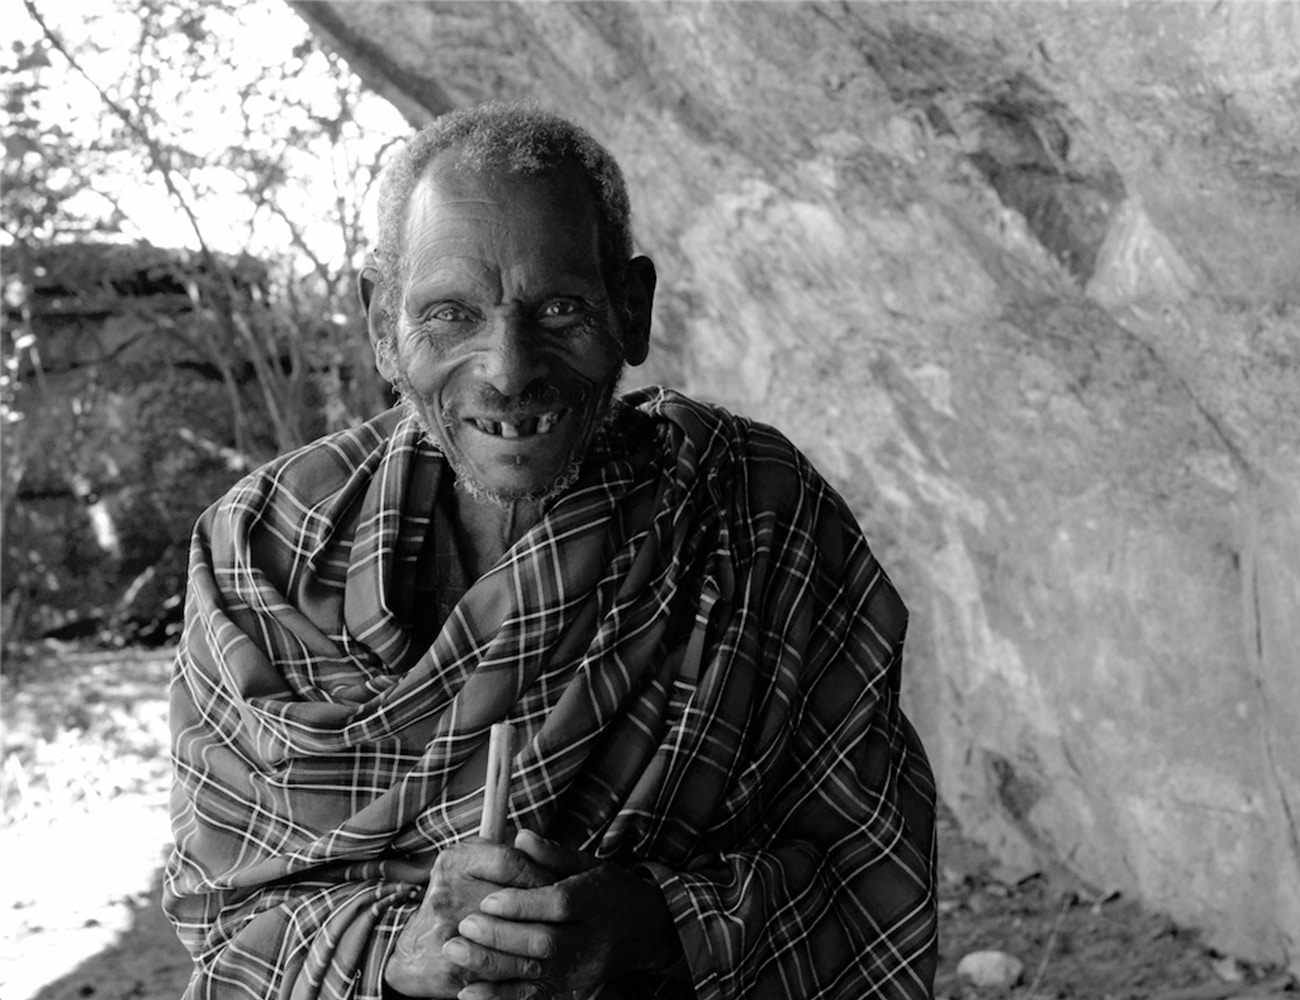 Gorwa Man in the Northern part of Tanzania.